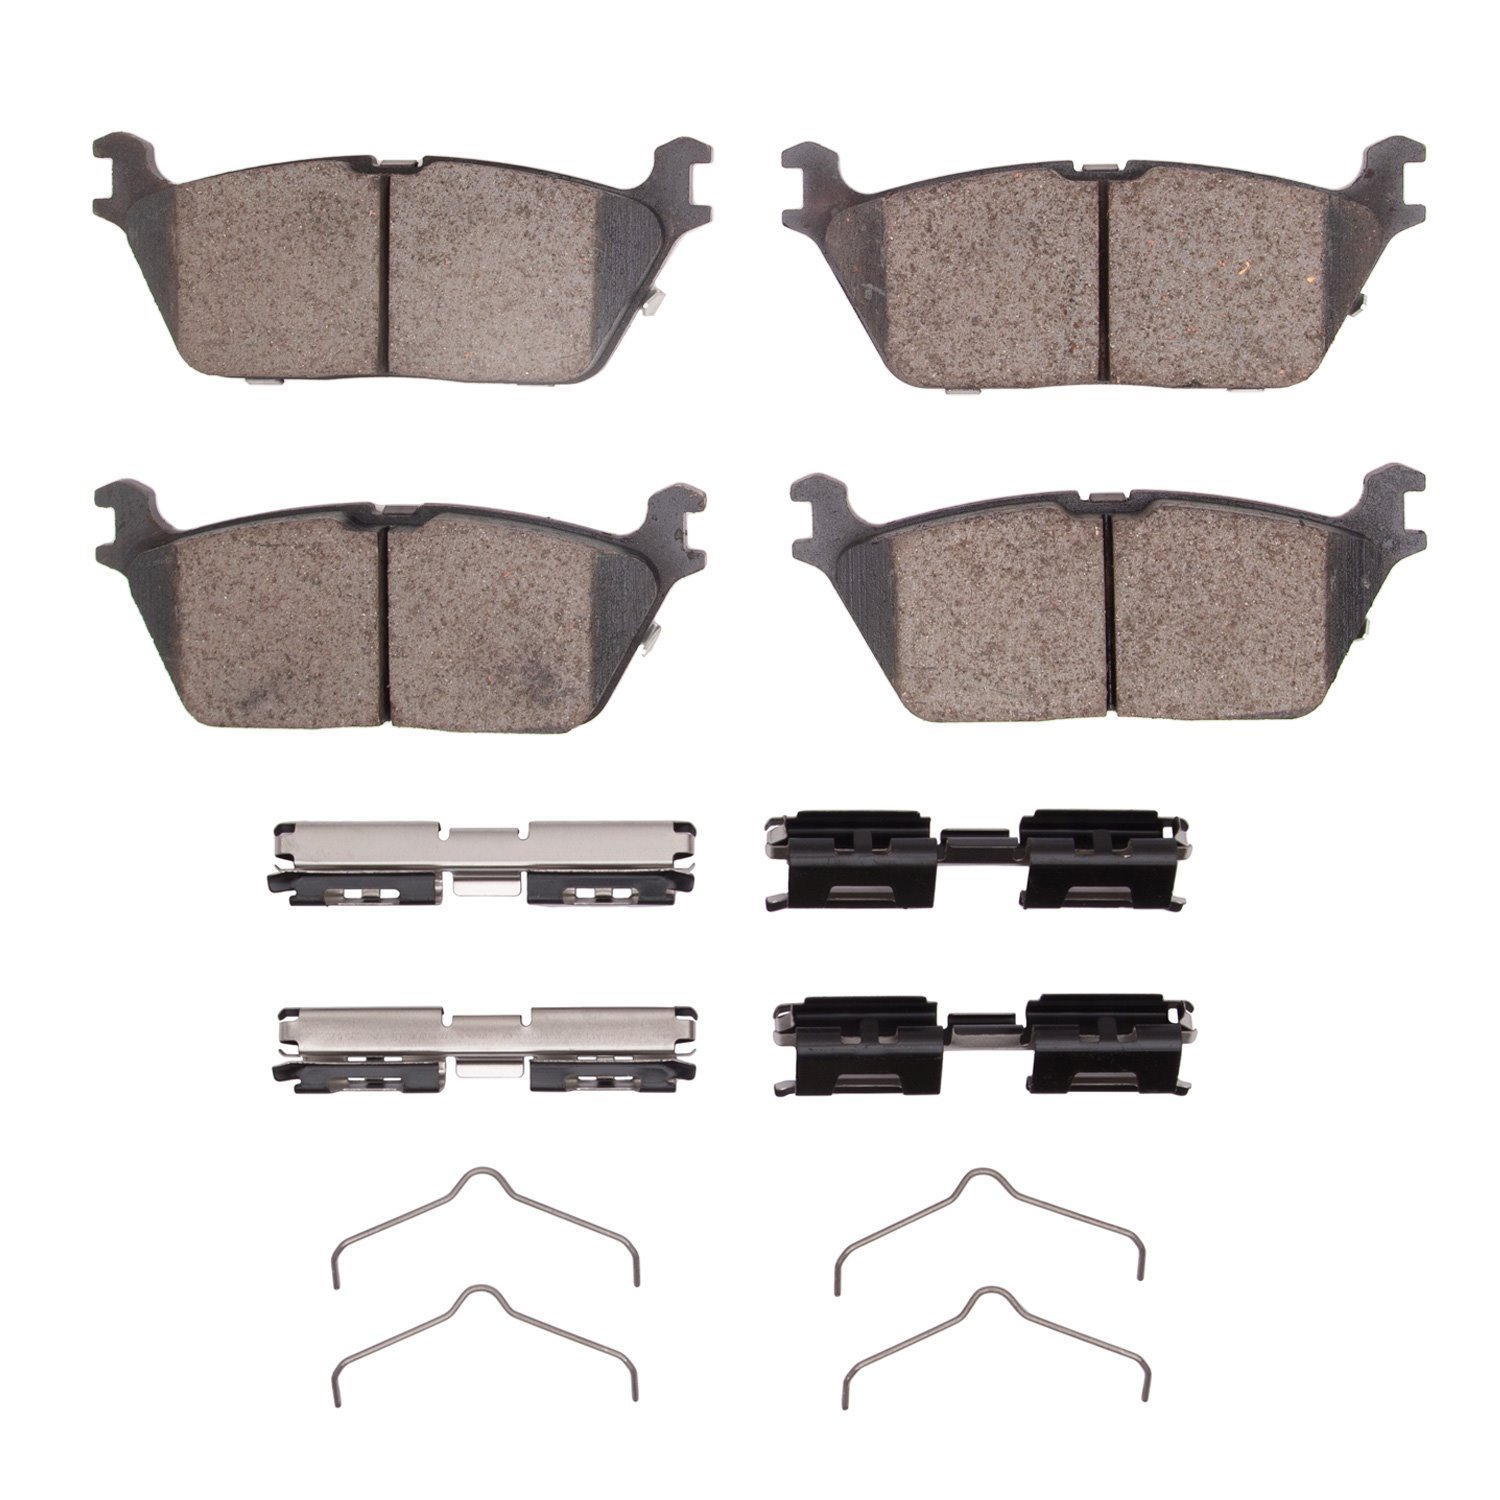 1551-2169-01 5000 Advanced Ceramic Brake Pads & Hardware Kit, Fits Select Mopar, Position: Rear